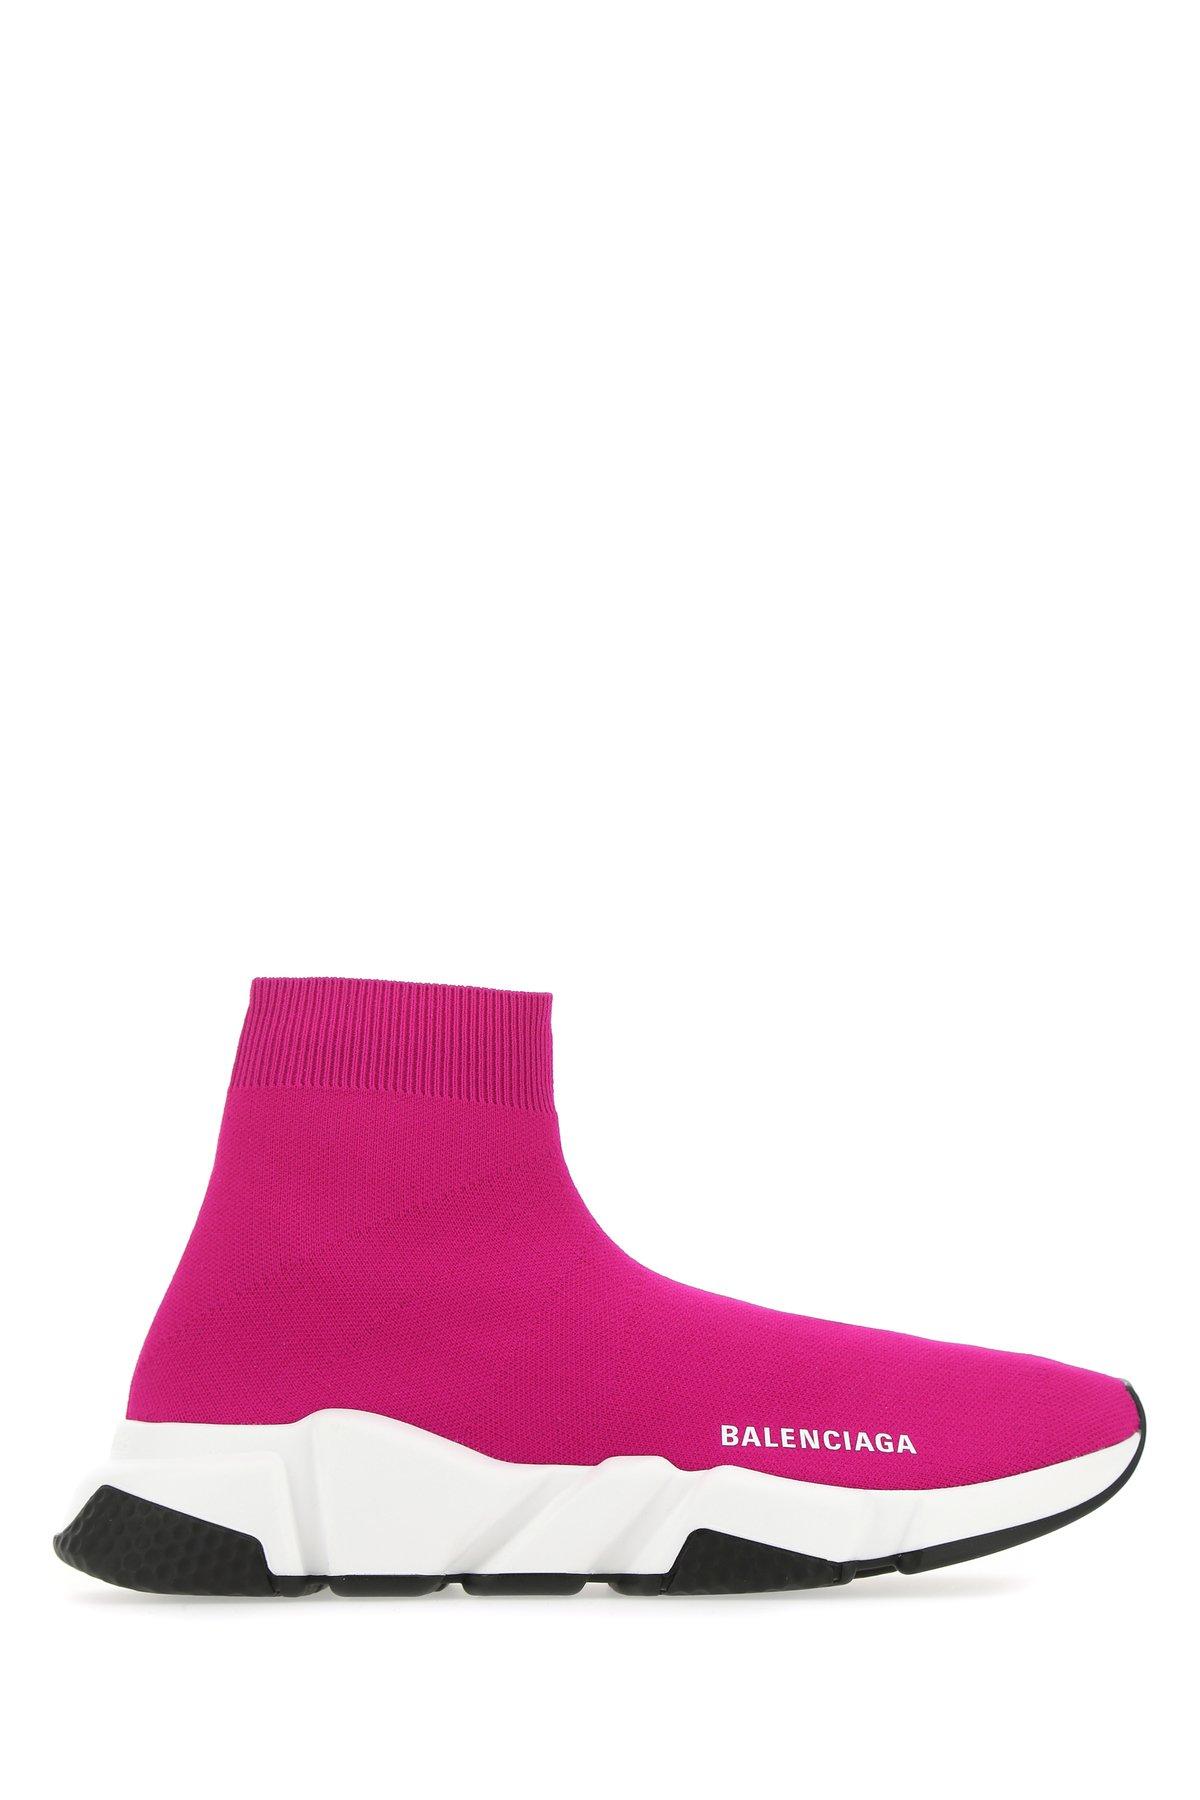 Balenciaga Slipon Sock Sneakers in Pink  Lyst